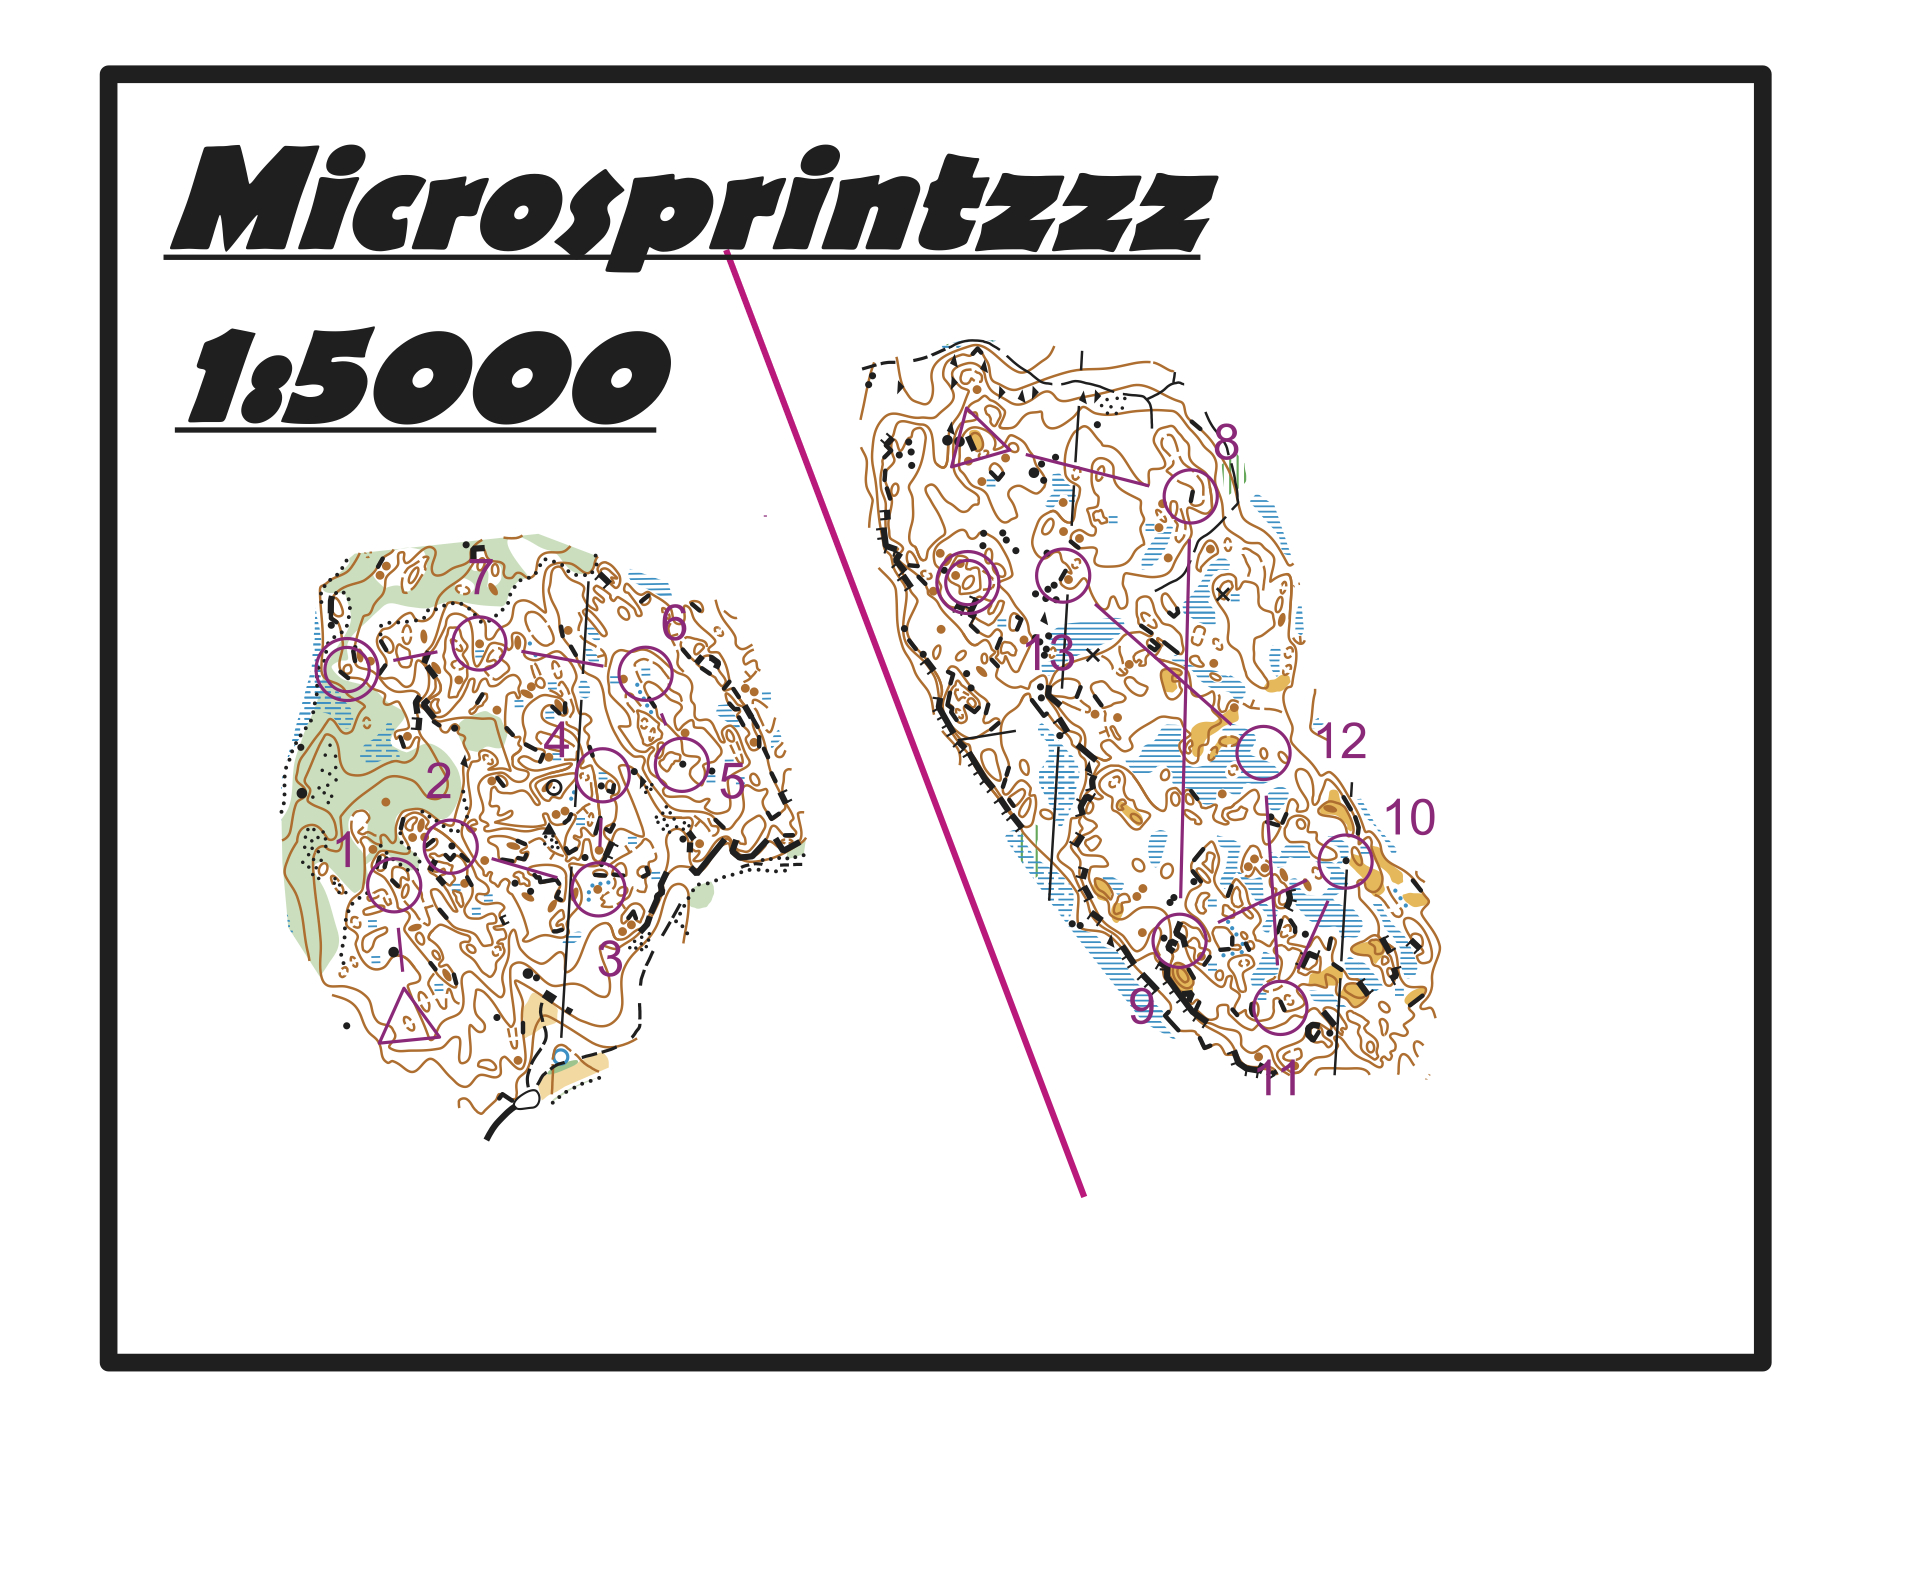 Micro sprintzzz (2017-02-14)